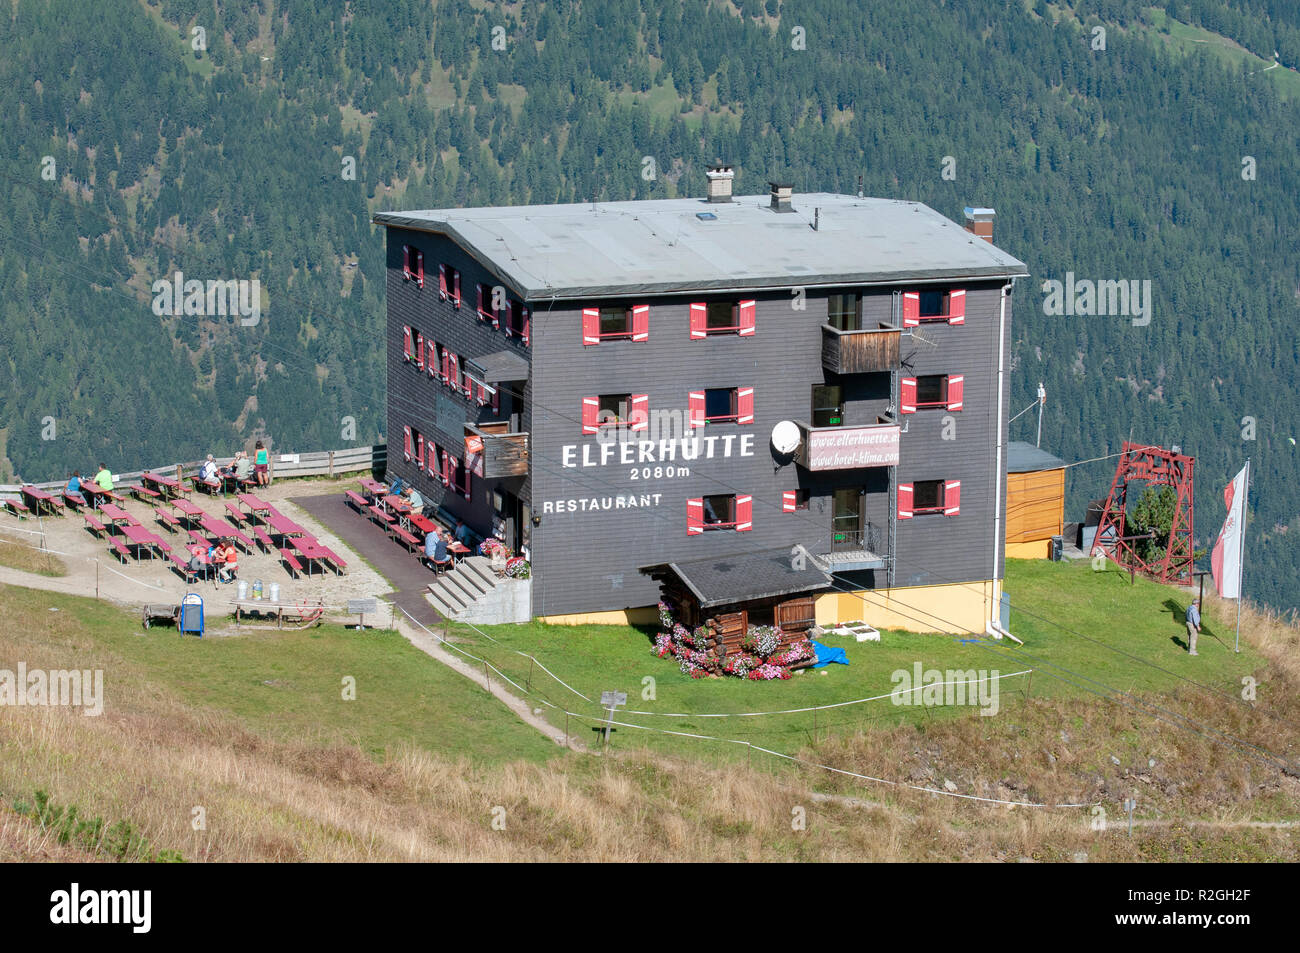 Elferhutte a restaurant and refuge on the summit of Elfer mountain, Neustift im Stubaital, Tirol, Austria Stock Photo